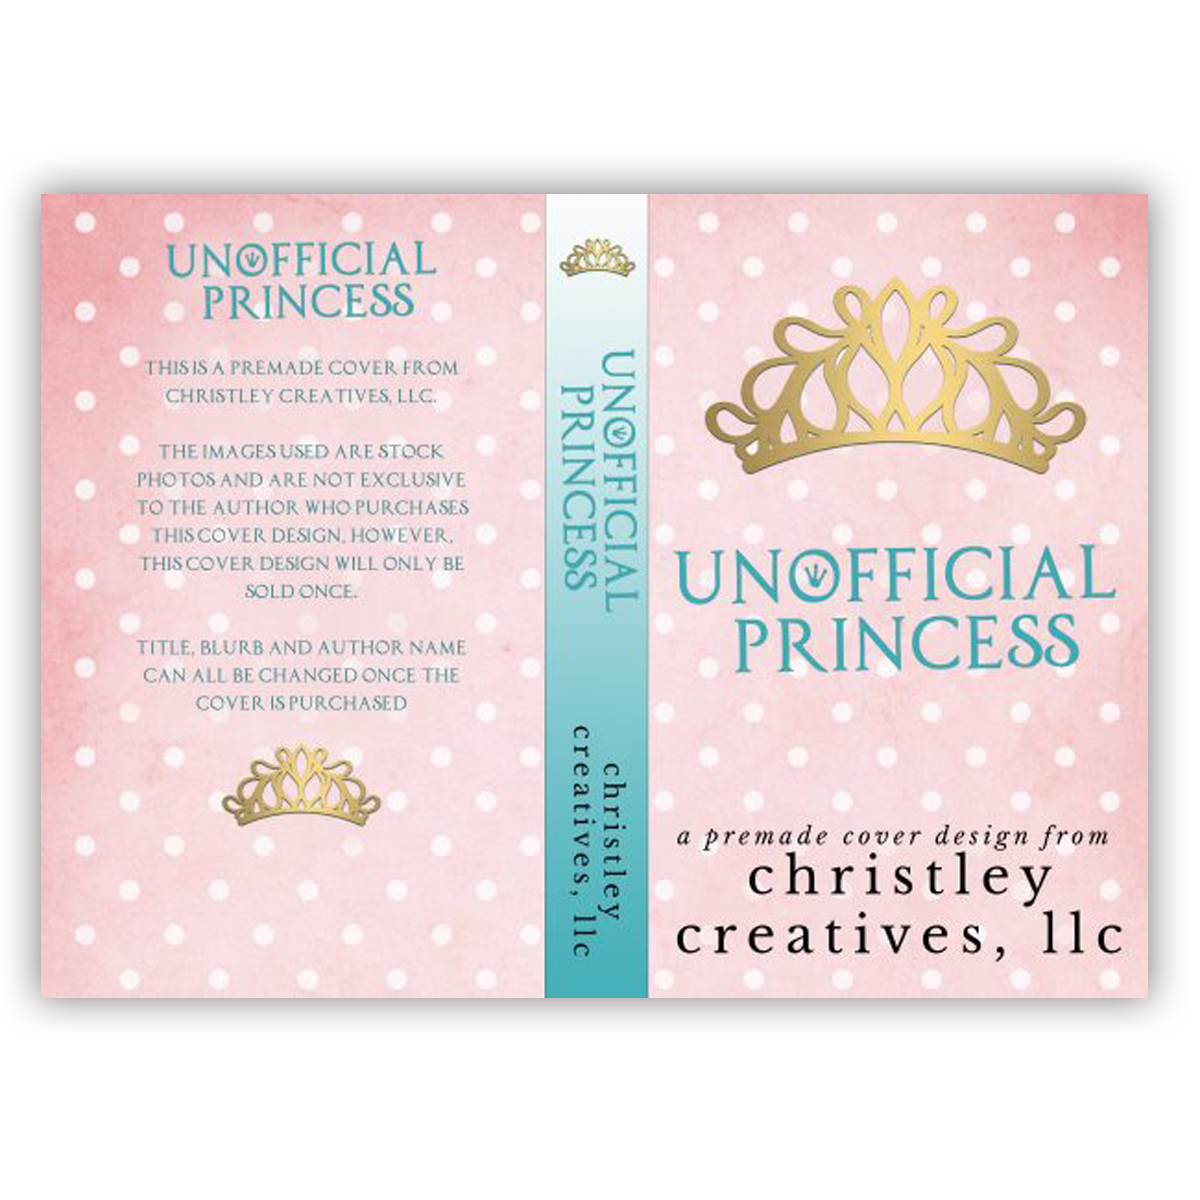 Unofficial Princess - Premade Contemporary Romance Book Cover from Christley Creatives